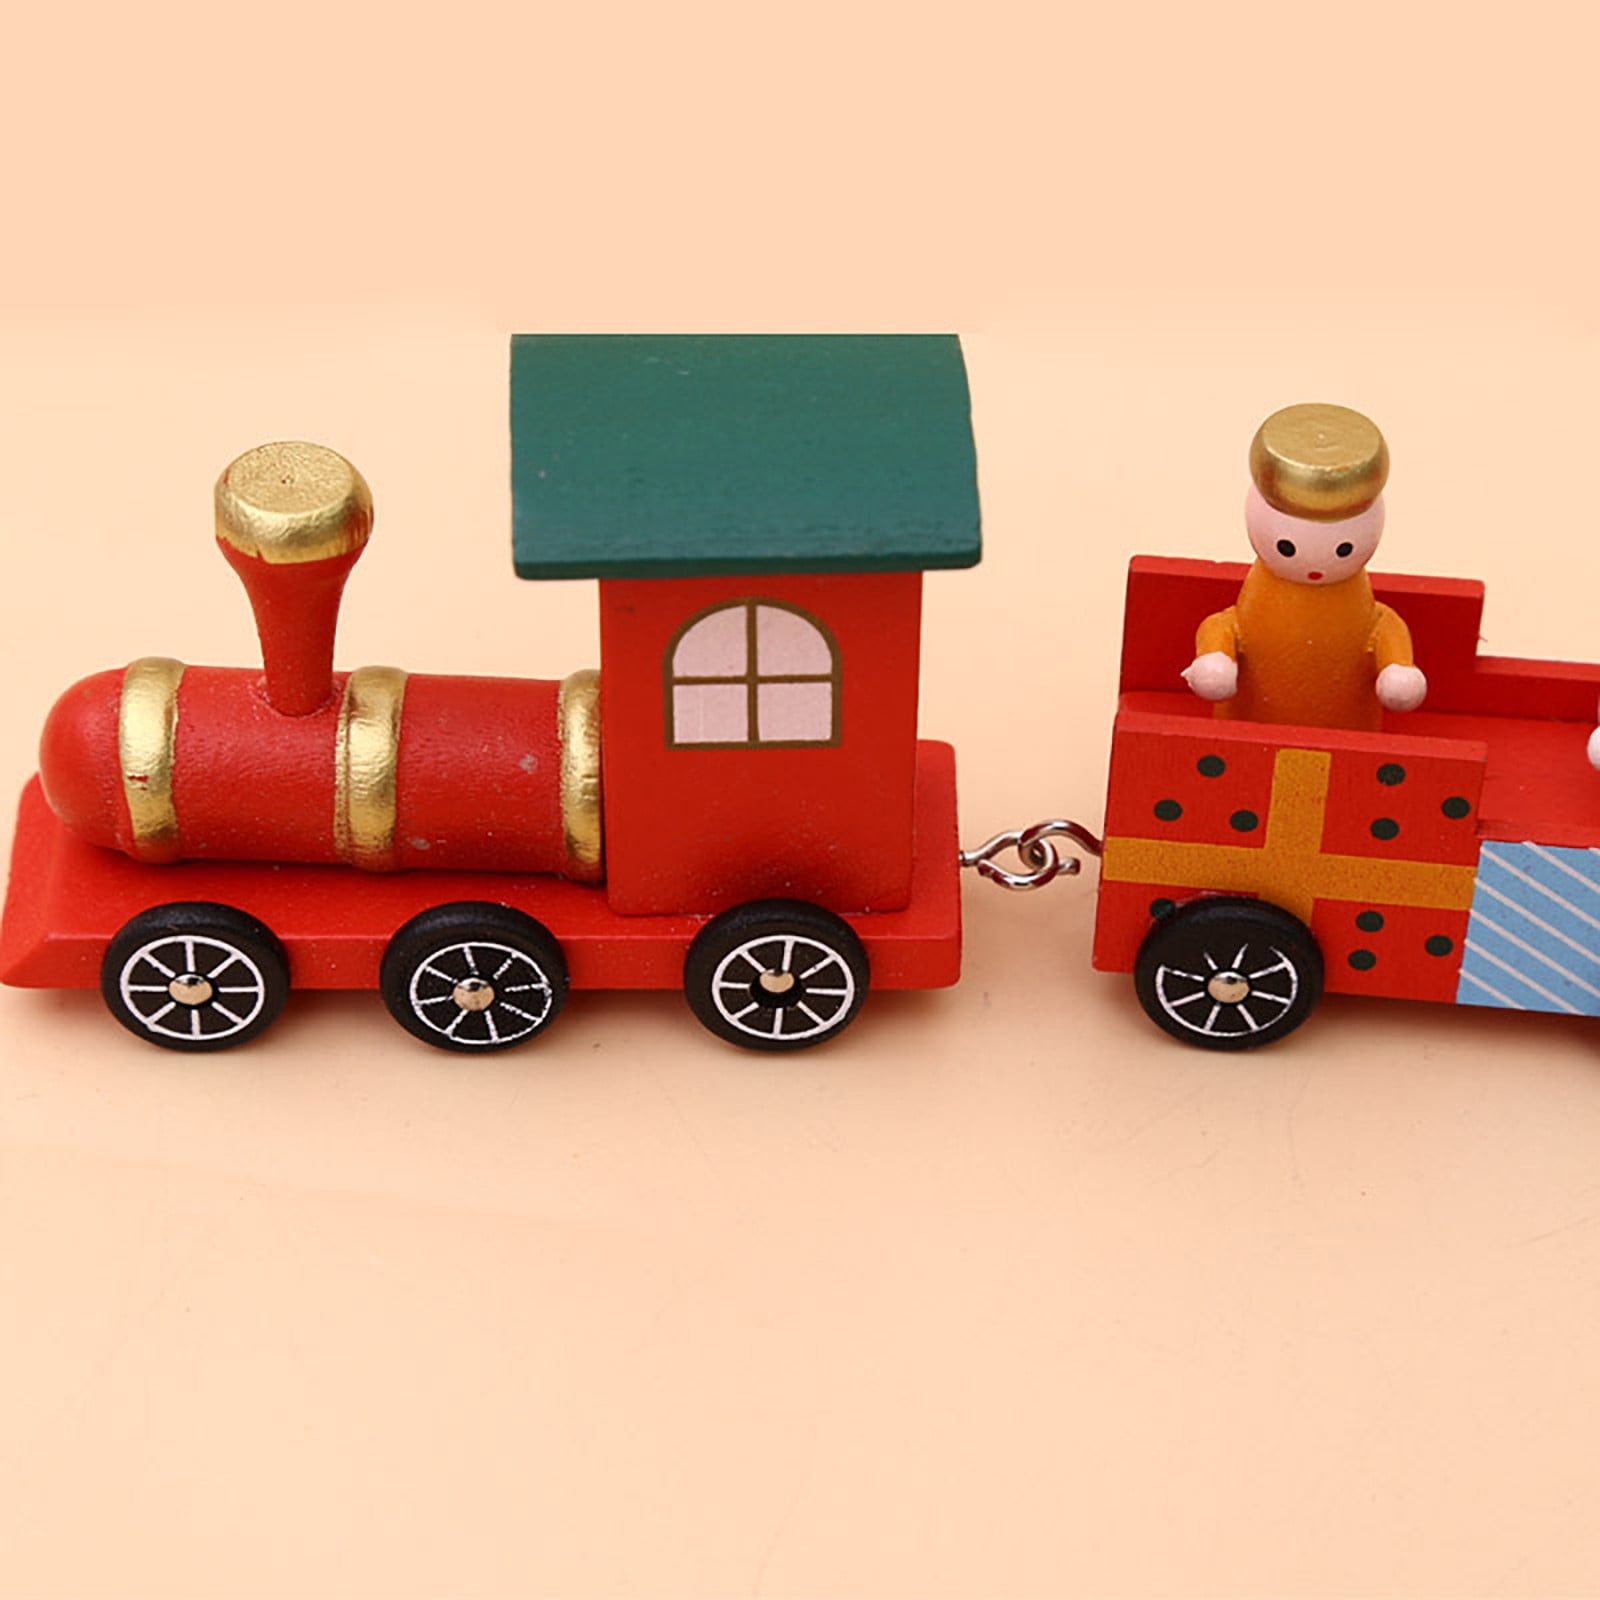 Christmas Small Train Wooden Train Ornament Home Decor Kids Festival Gifts